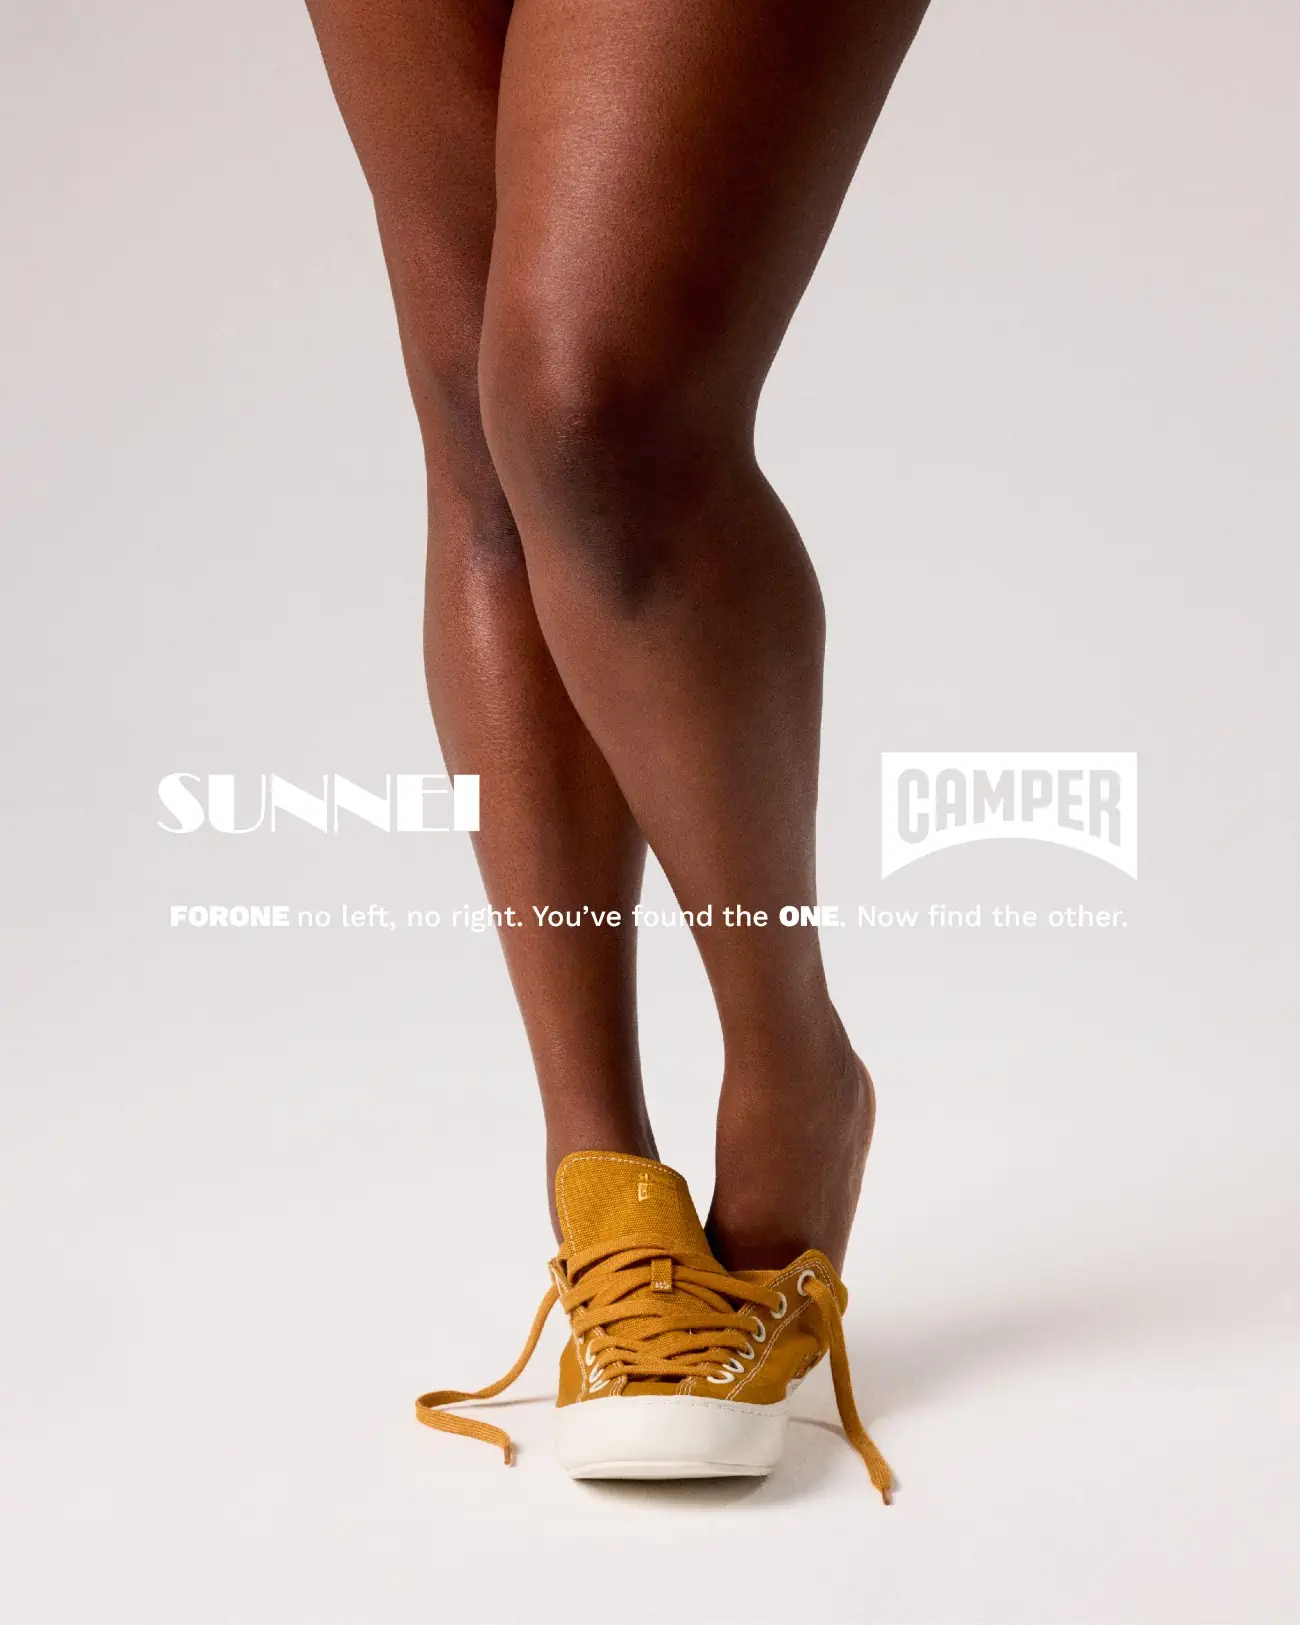 Camper and Sunnei present Forone, the revolutionary single-shoe concept